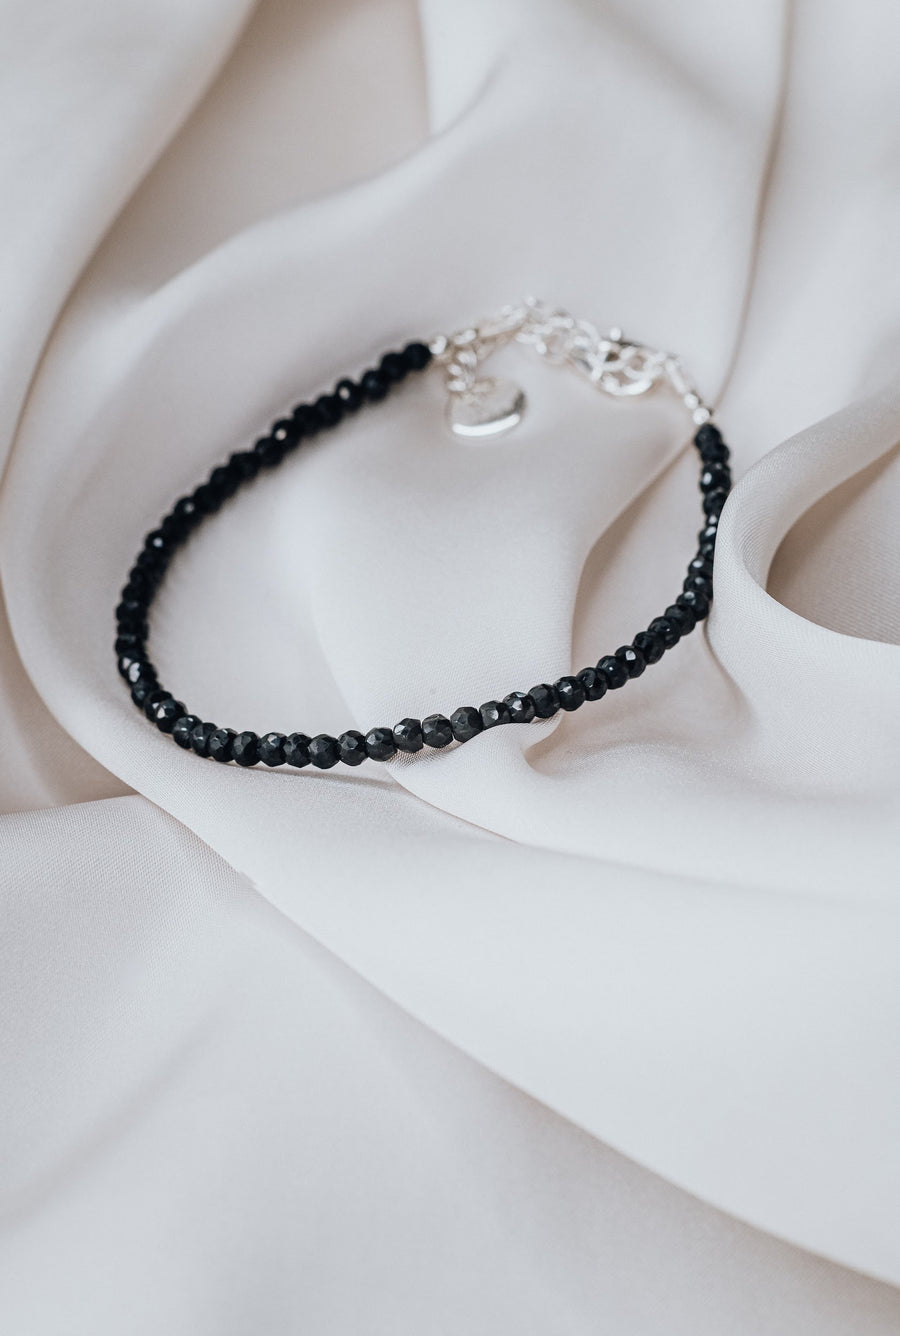 Black Onyx silver bracelet